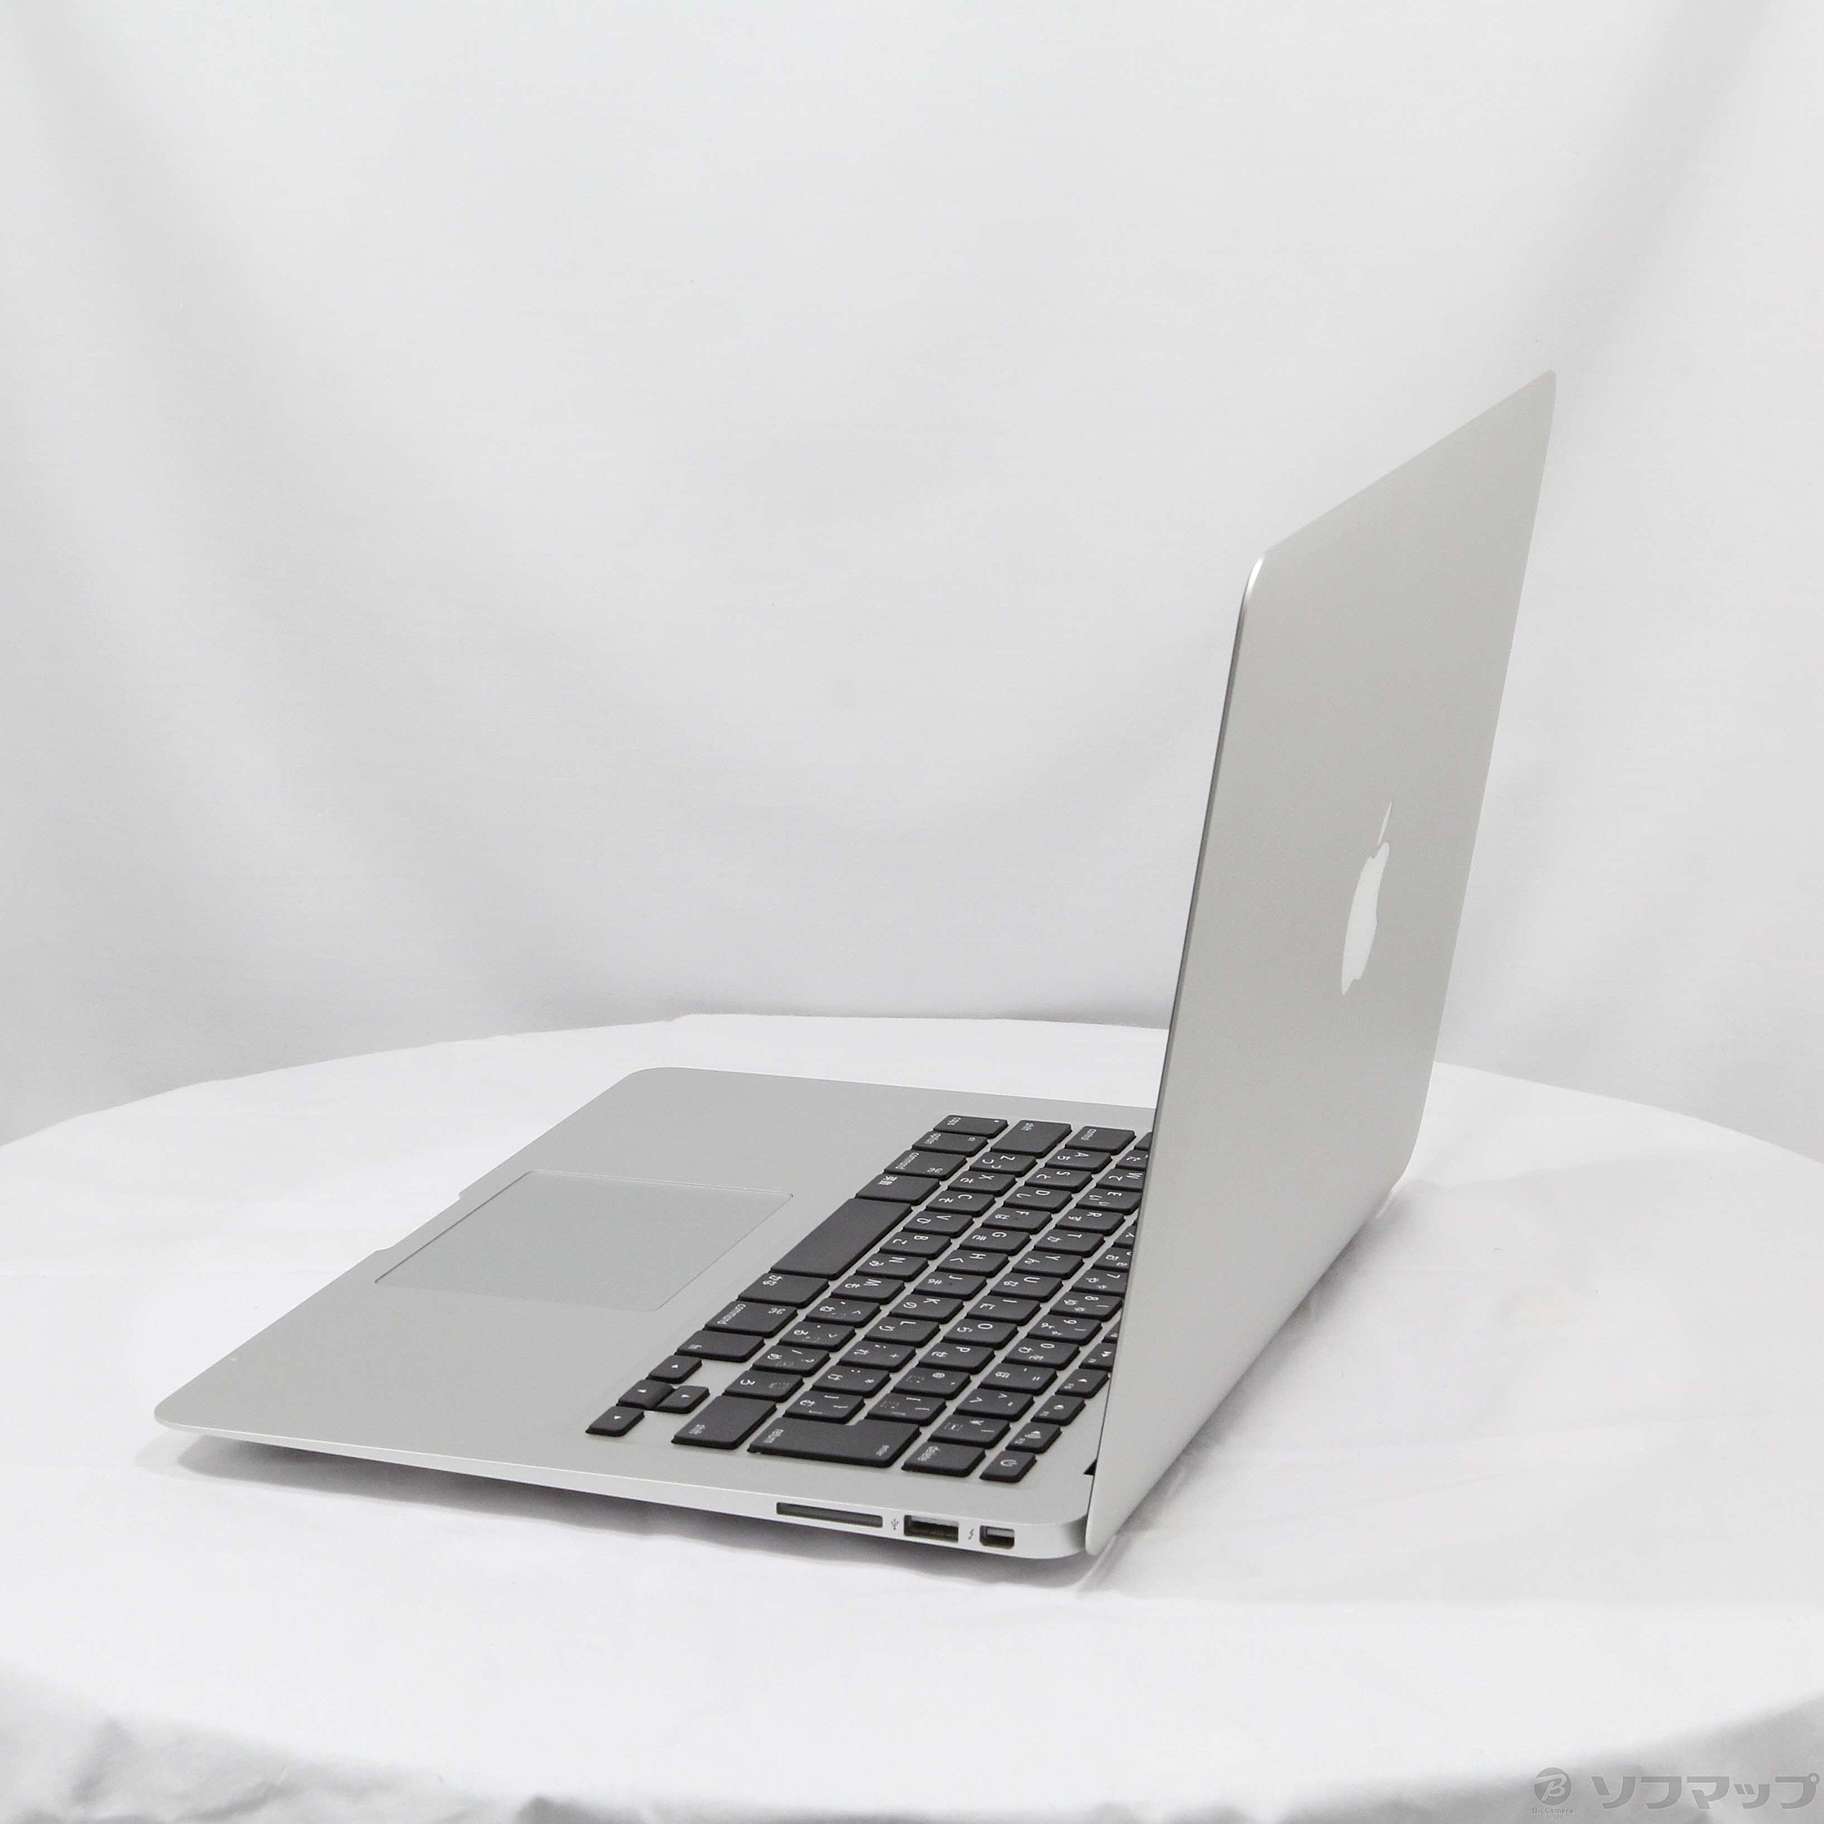 MacBook Air 13-inch,Early 2015〈MJVE2J/A〉